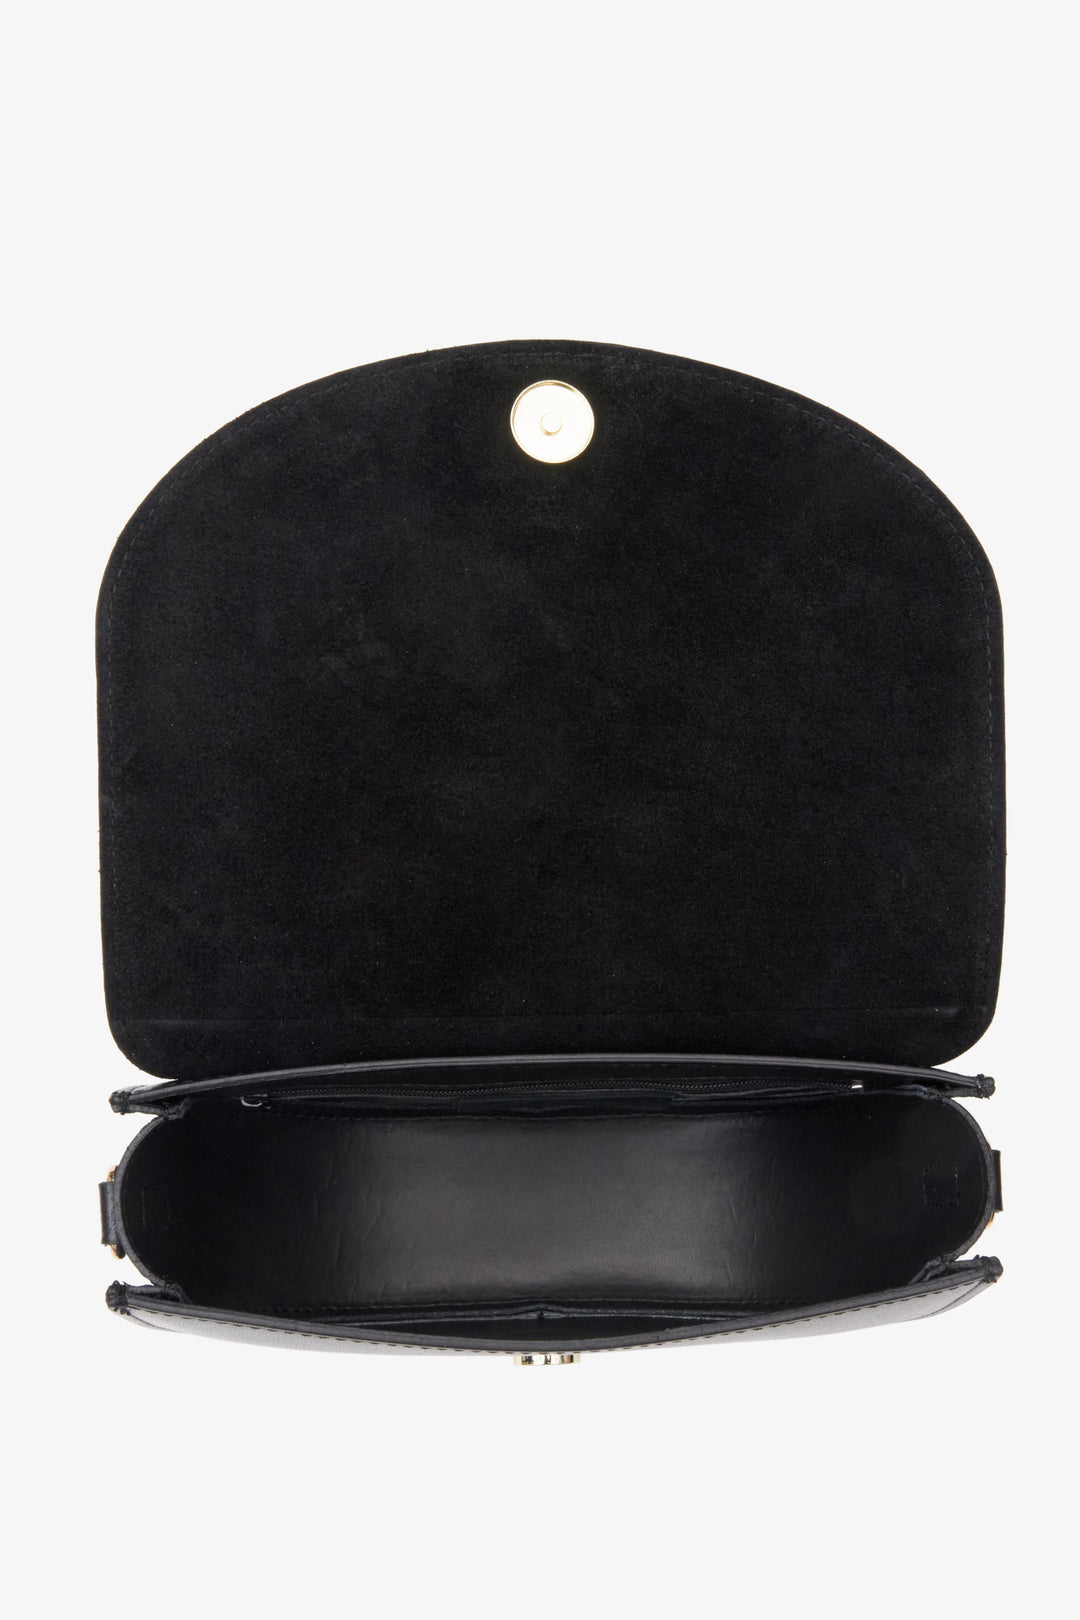 Women's black leather handbag Estro - a close-up on bag's compartment.